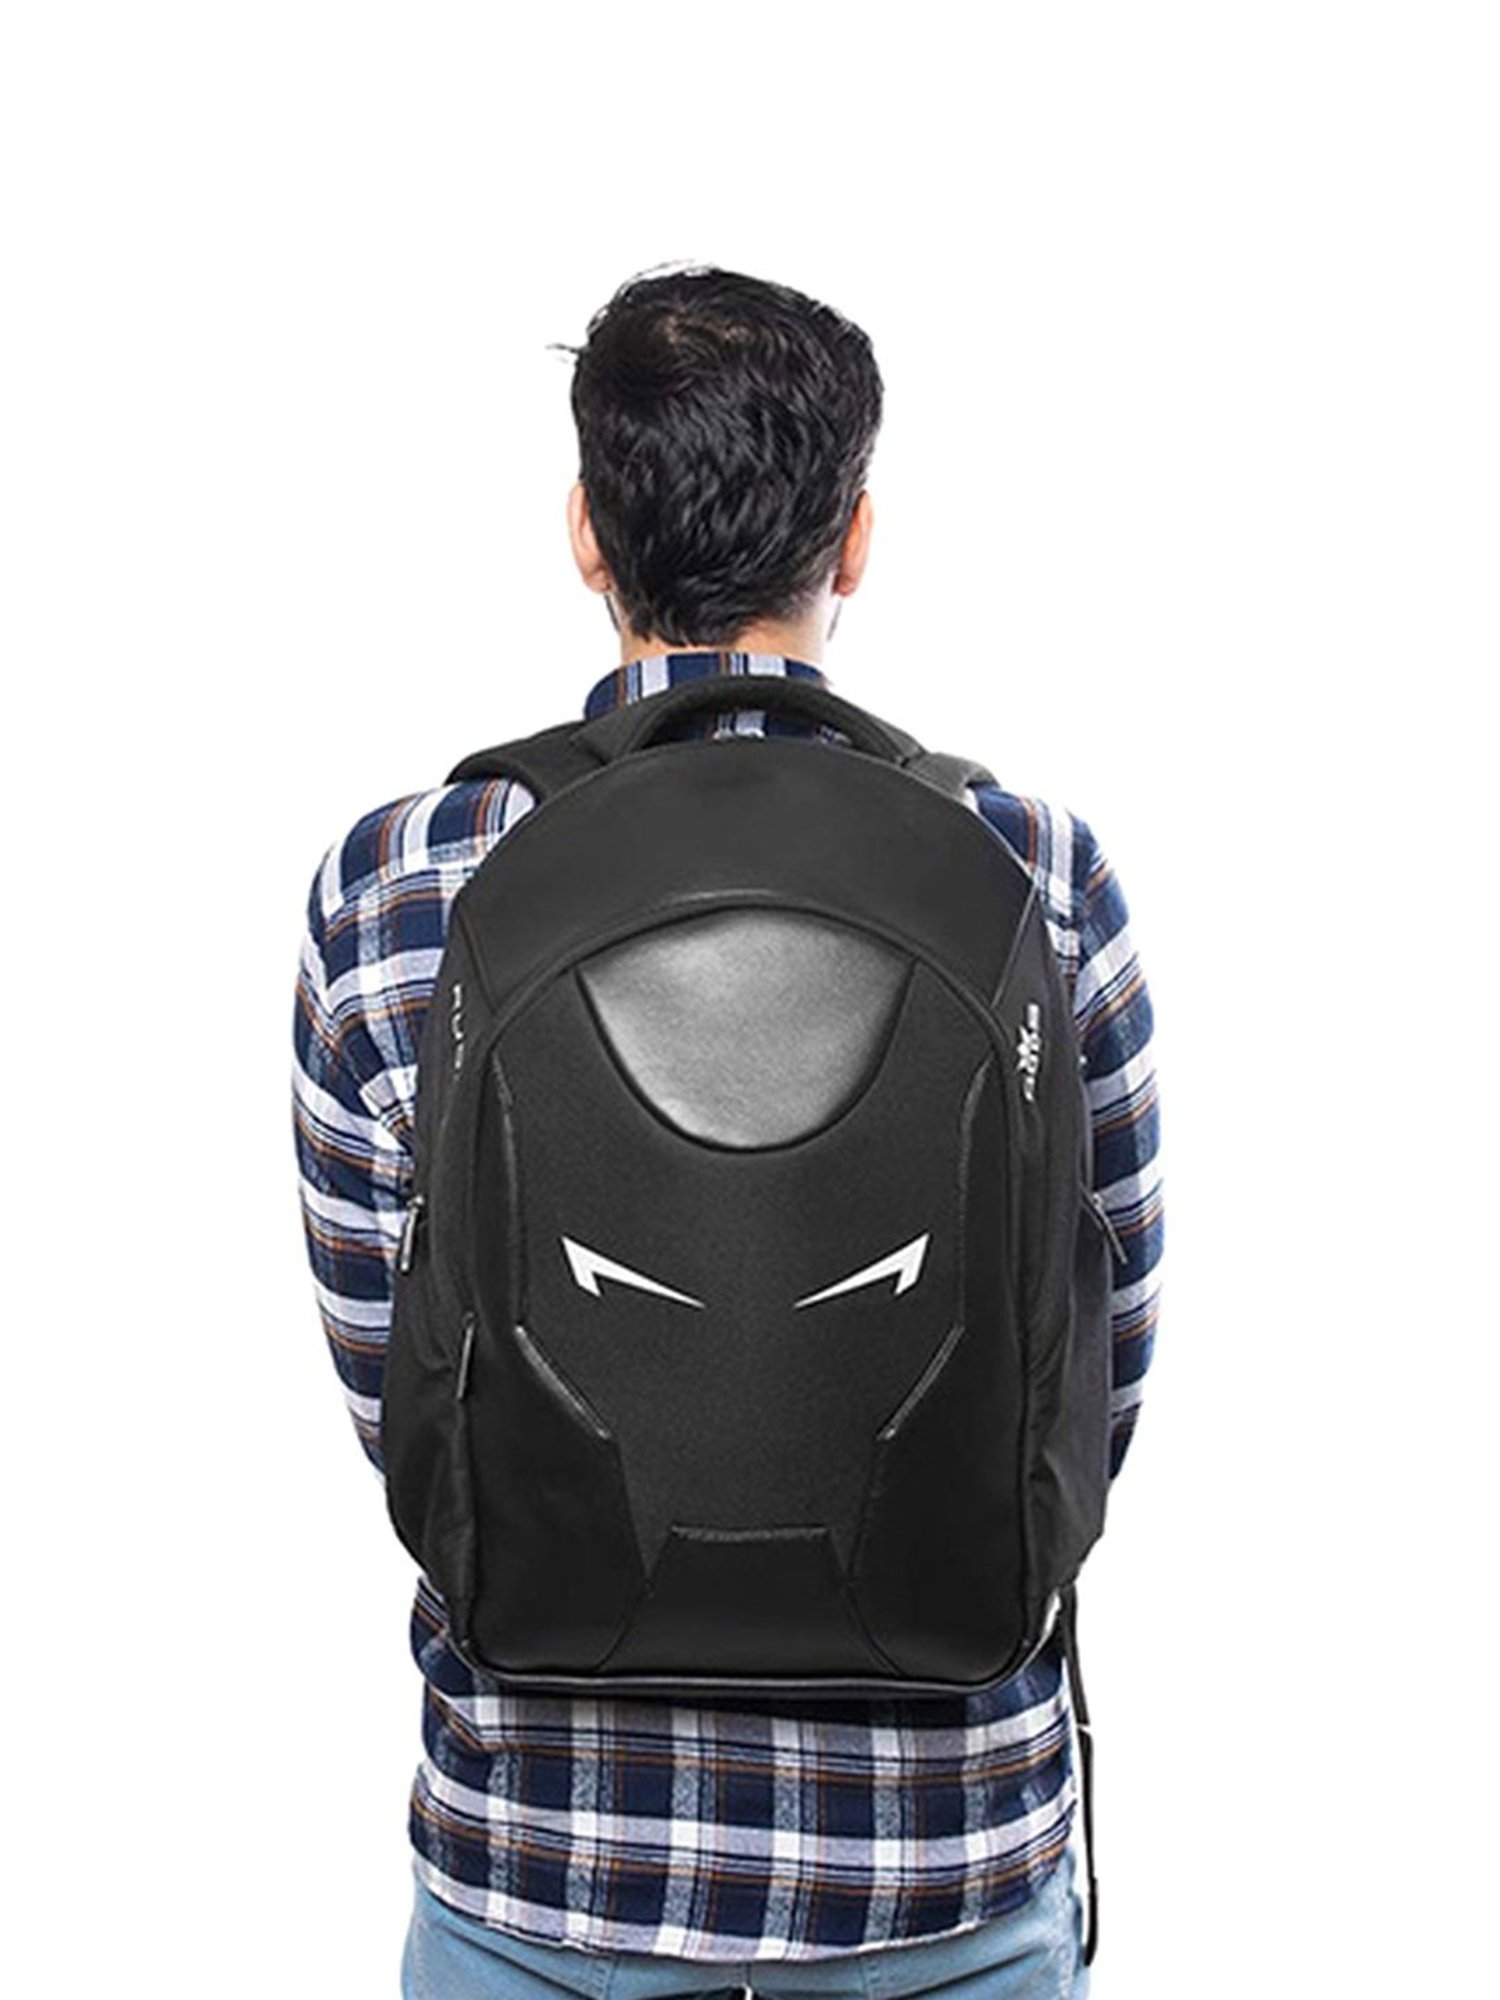 GODS Rudra 20 L Backpack Black - Price in India | Flipkart.com